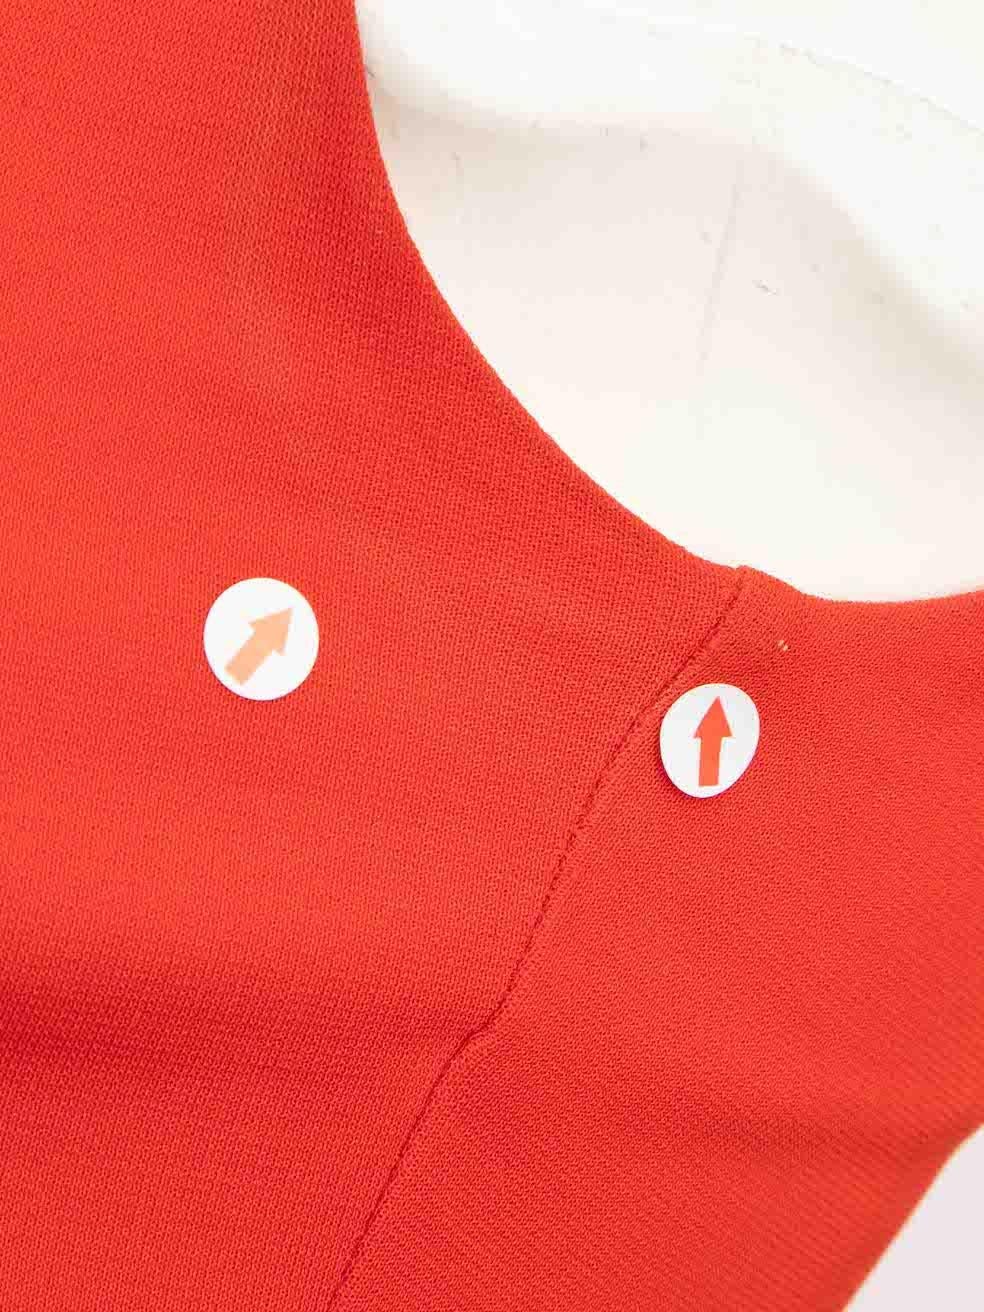 Philipp Plein Red Sleeveless Flared Mini Dress Size M For Sale 1